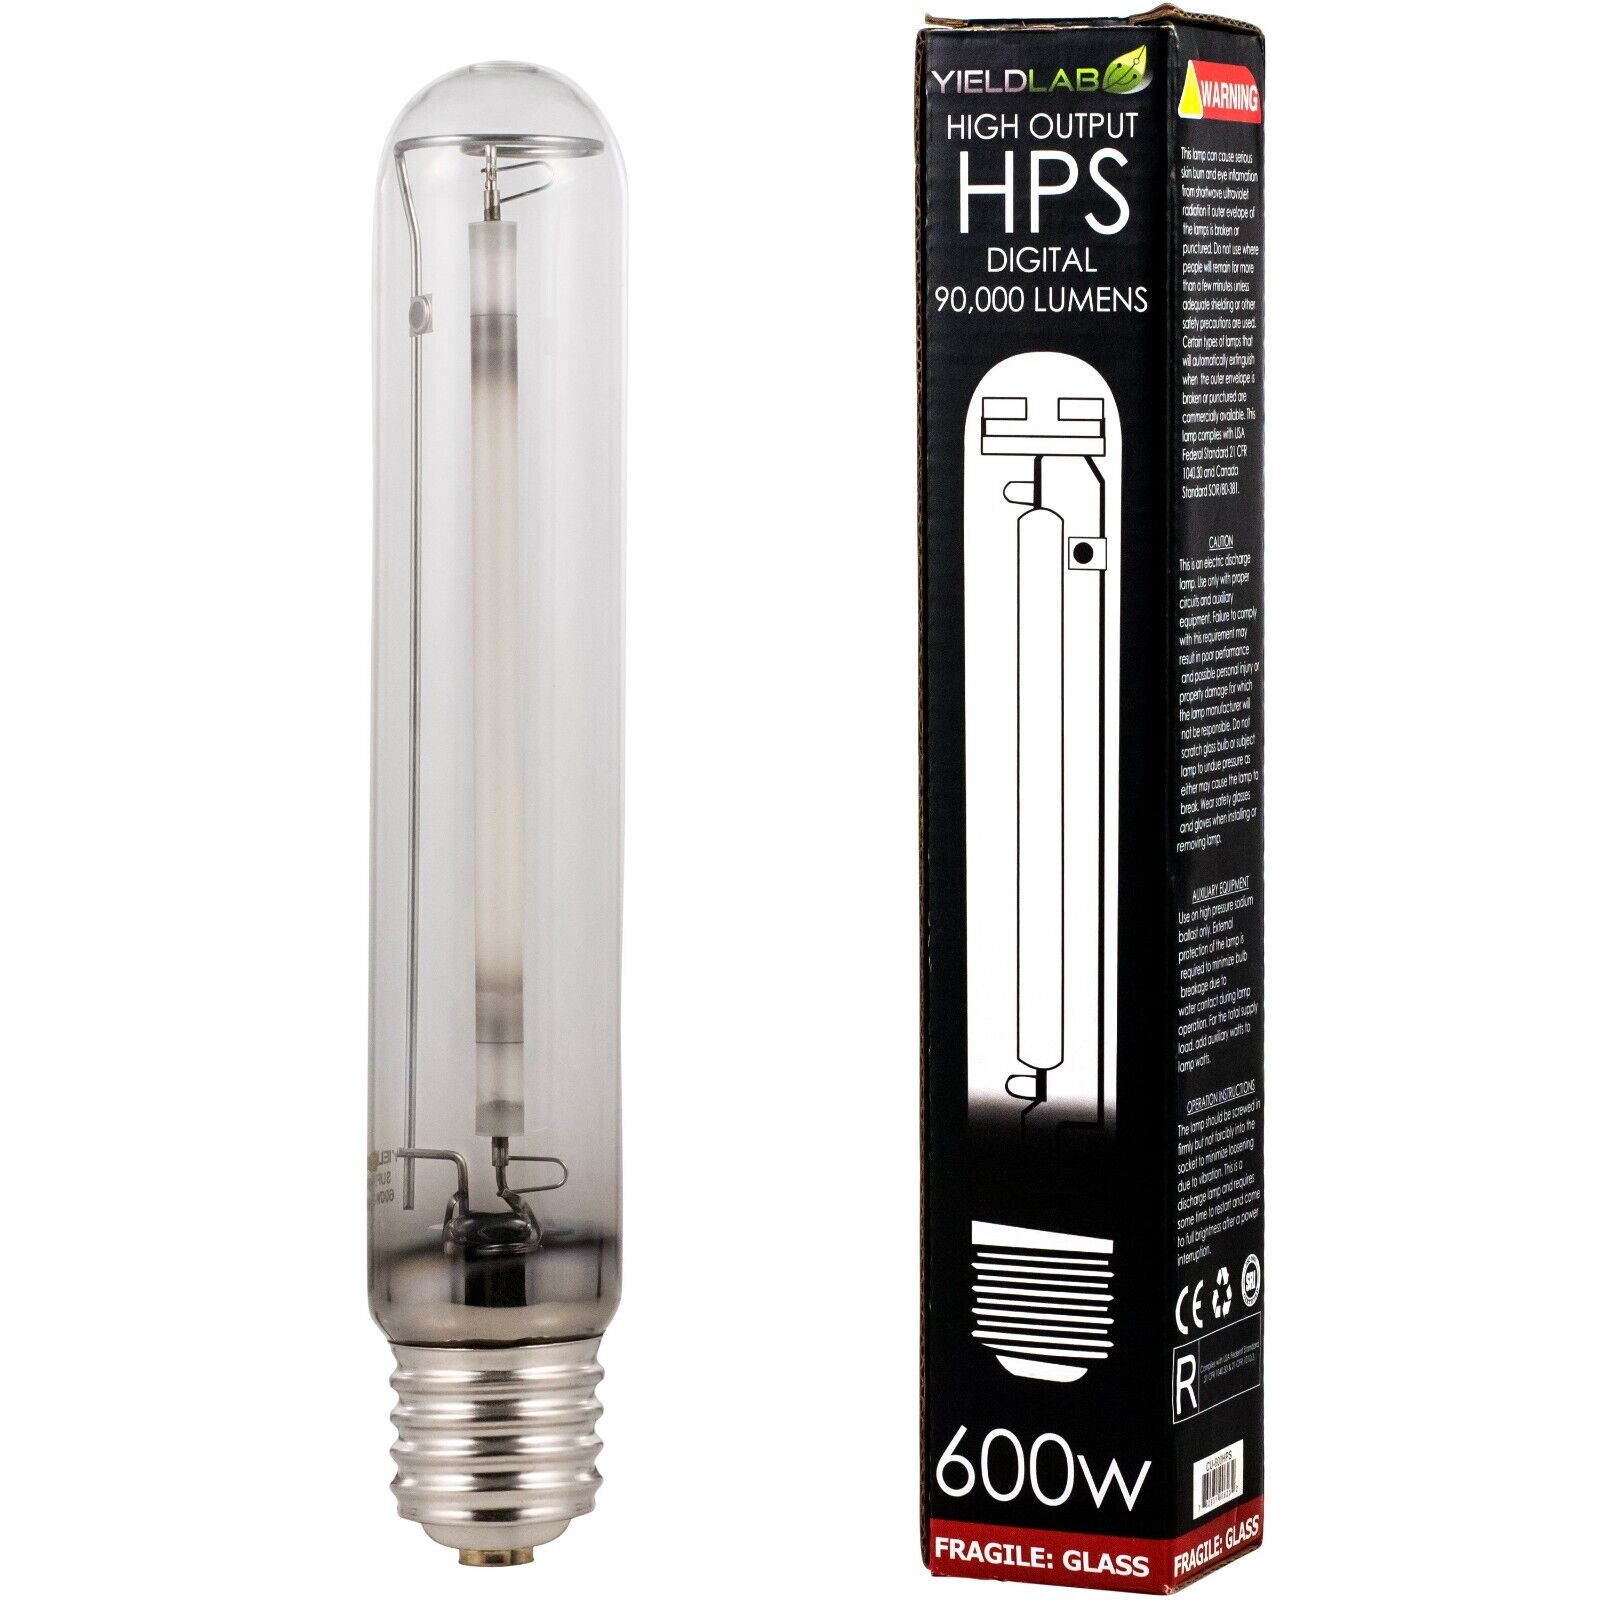 Yield Lab HPS 600w Lamp HID Bulb